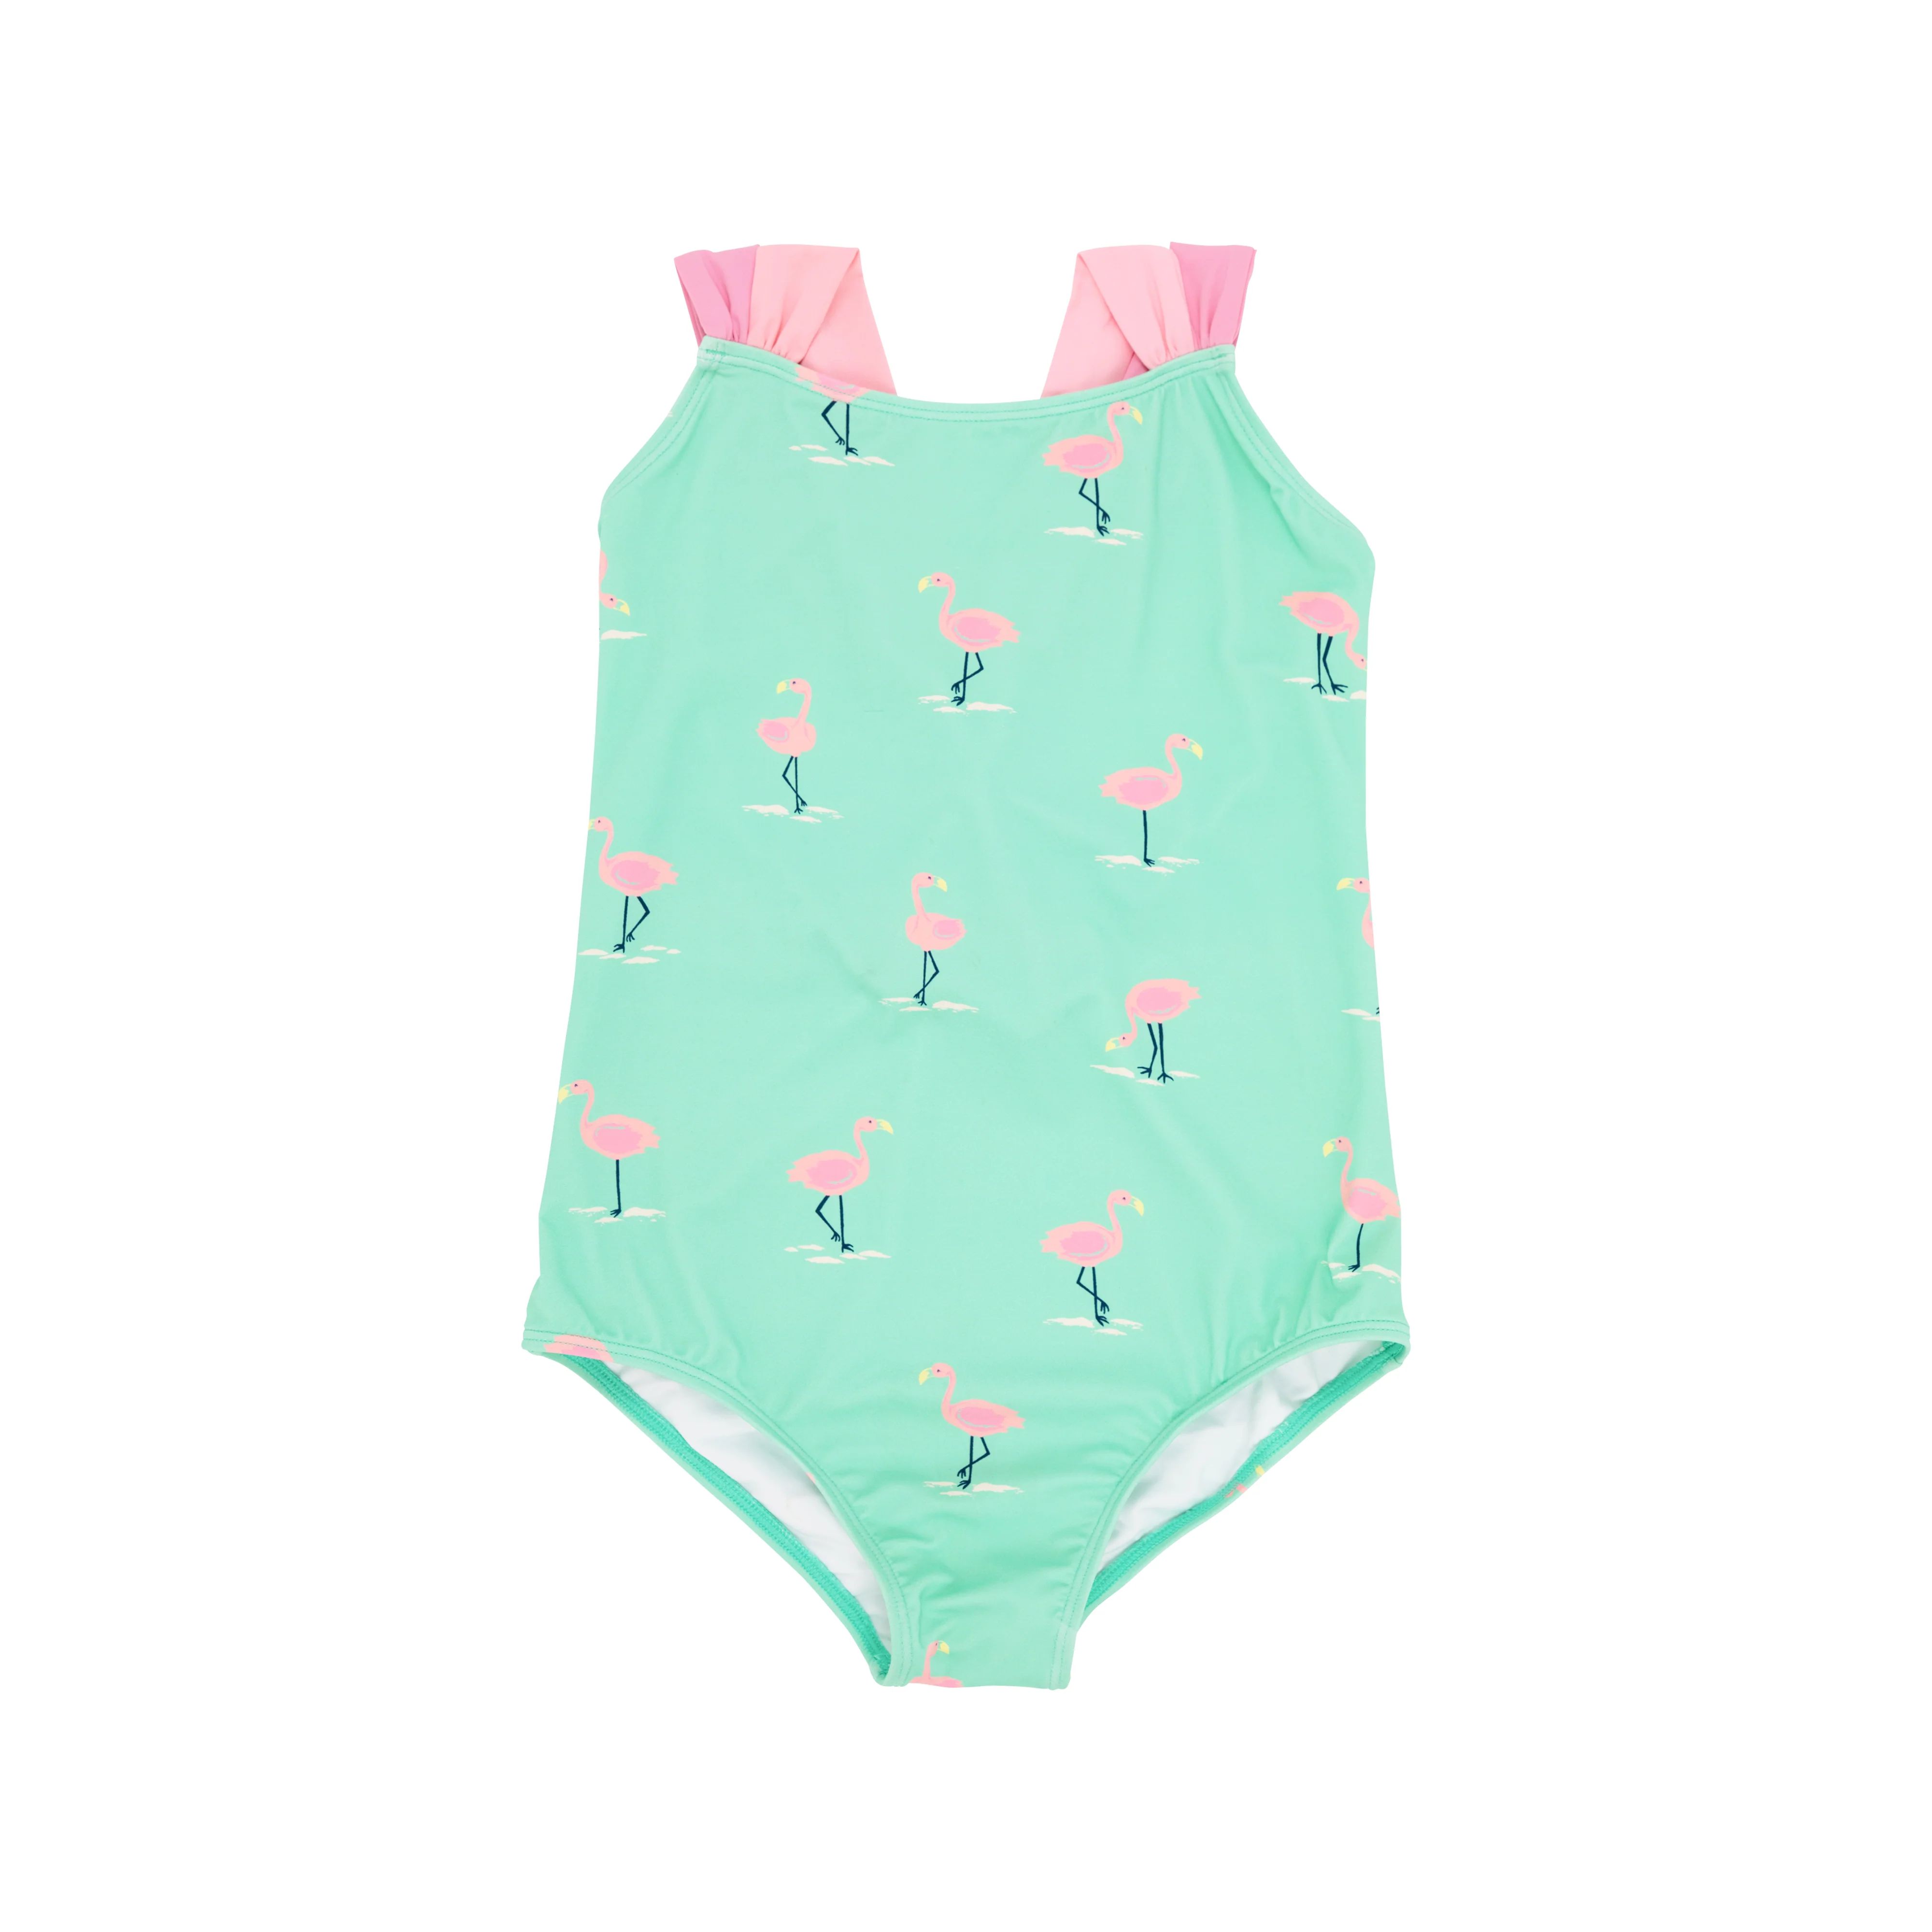 Seabrook Bathing Suit - Flarda Flamingo with Sandpearl Pink & Hamptons Hot Pink | The Beaufort Bonnet Company